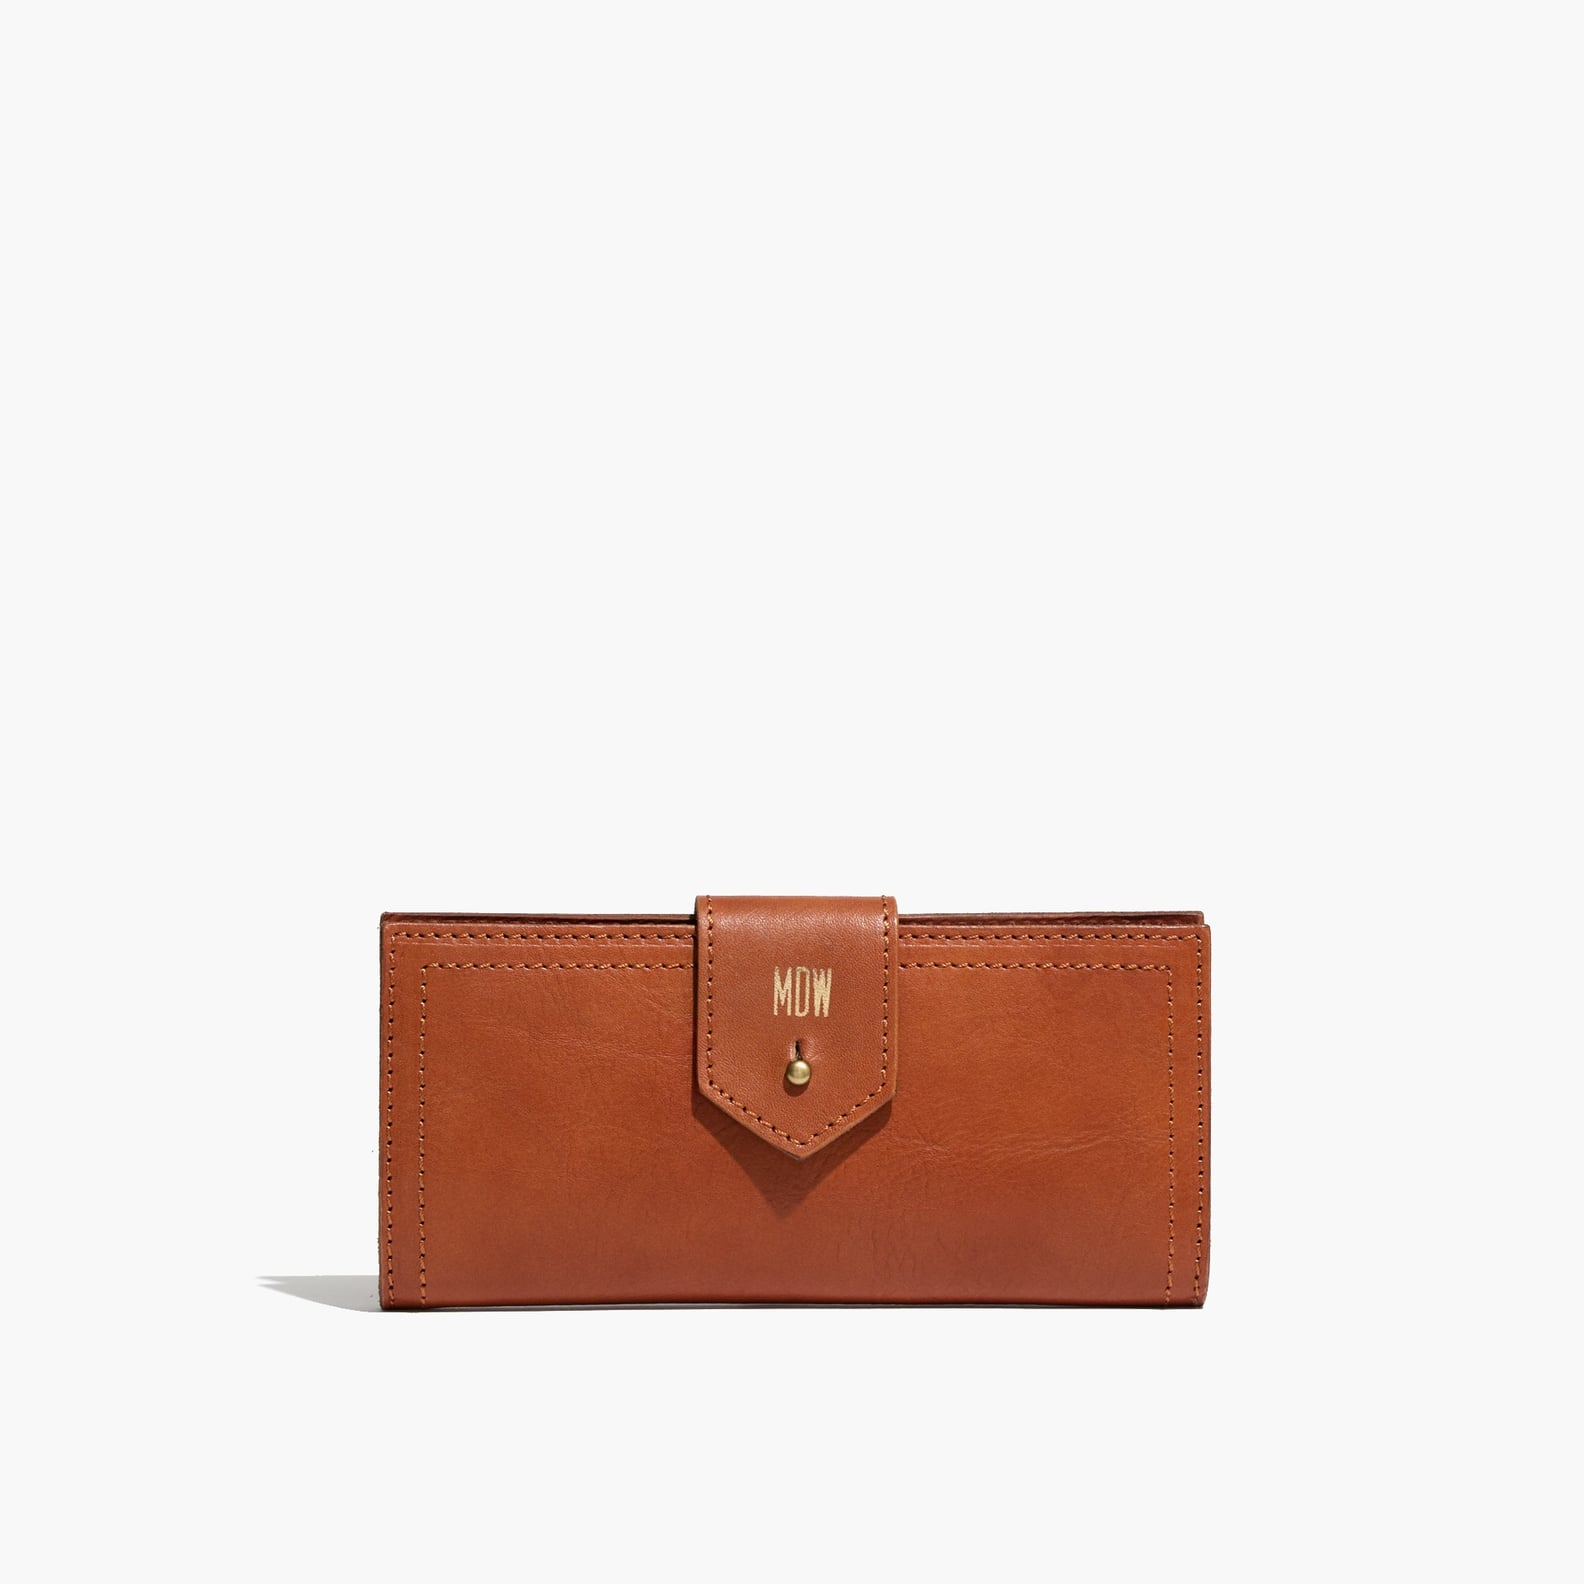 Madewell Monogrammed Bags | POPSUGAR Fashion